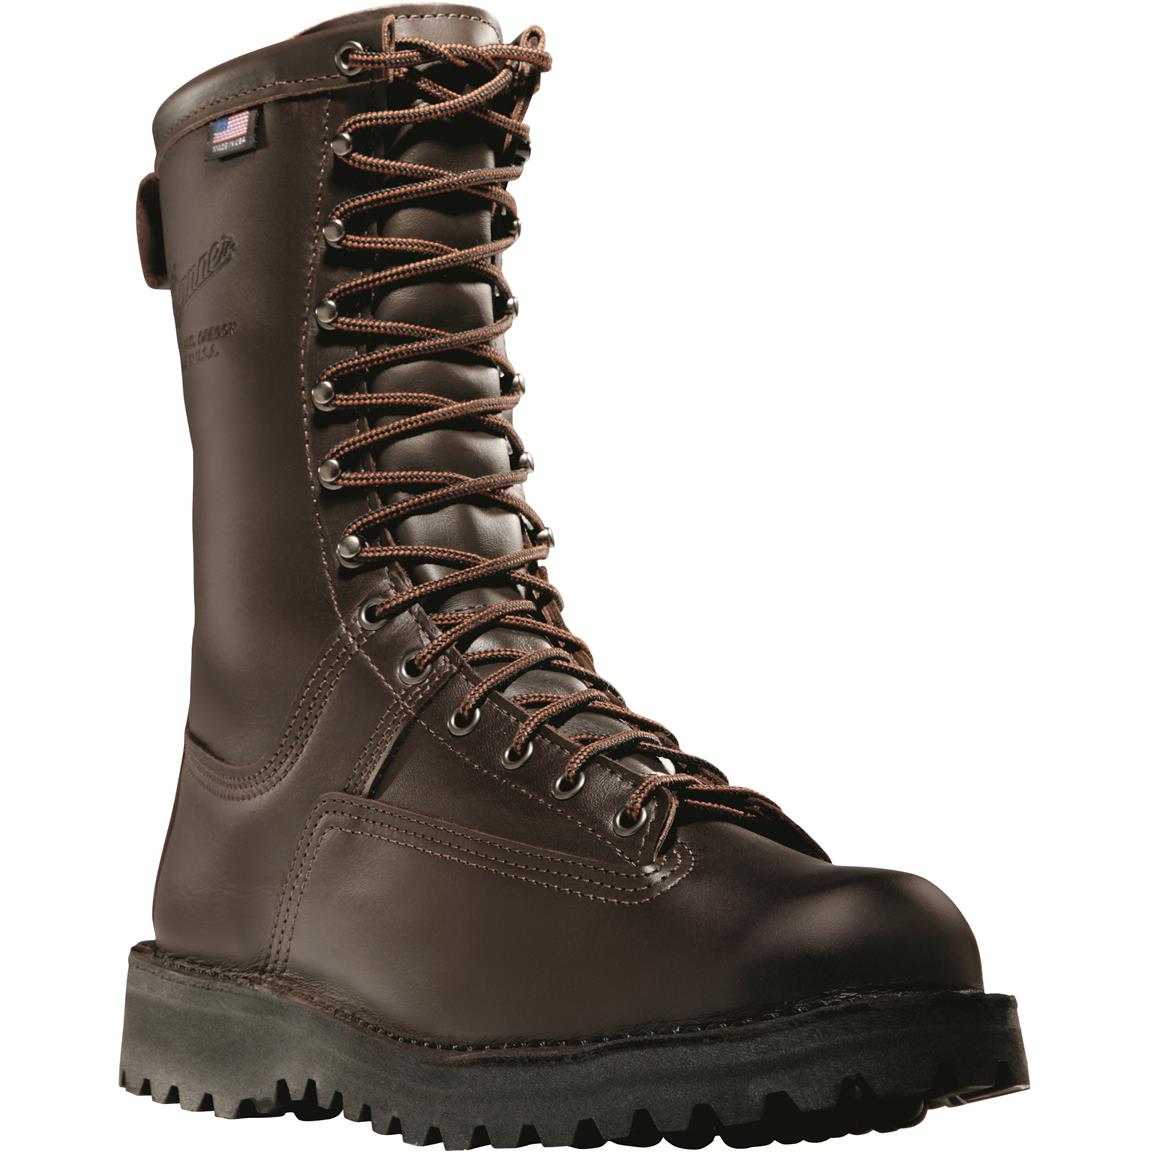 Danner Canadian 10" Men's GORE-TEX Waterproof Insulated Hunting Boots, 600-Gram, Brown